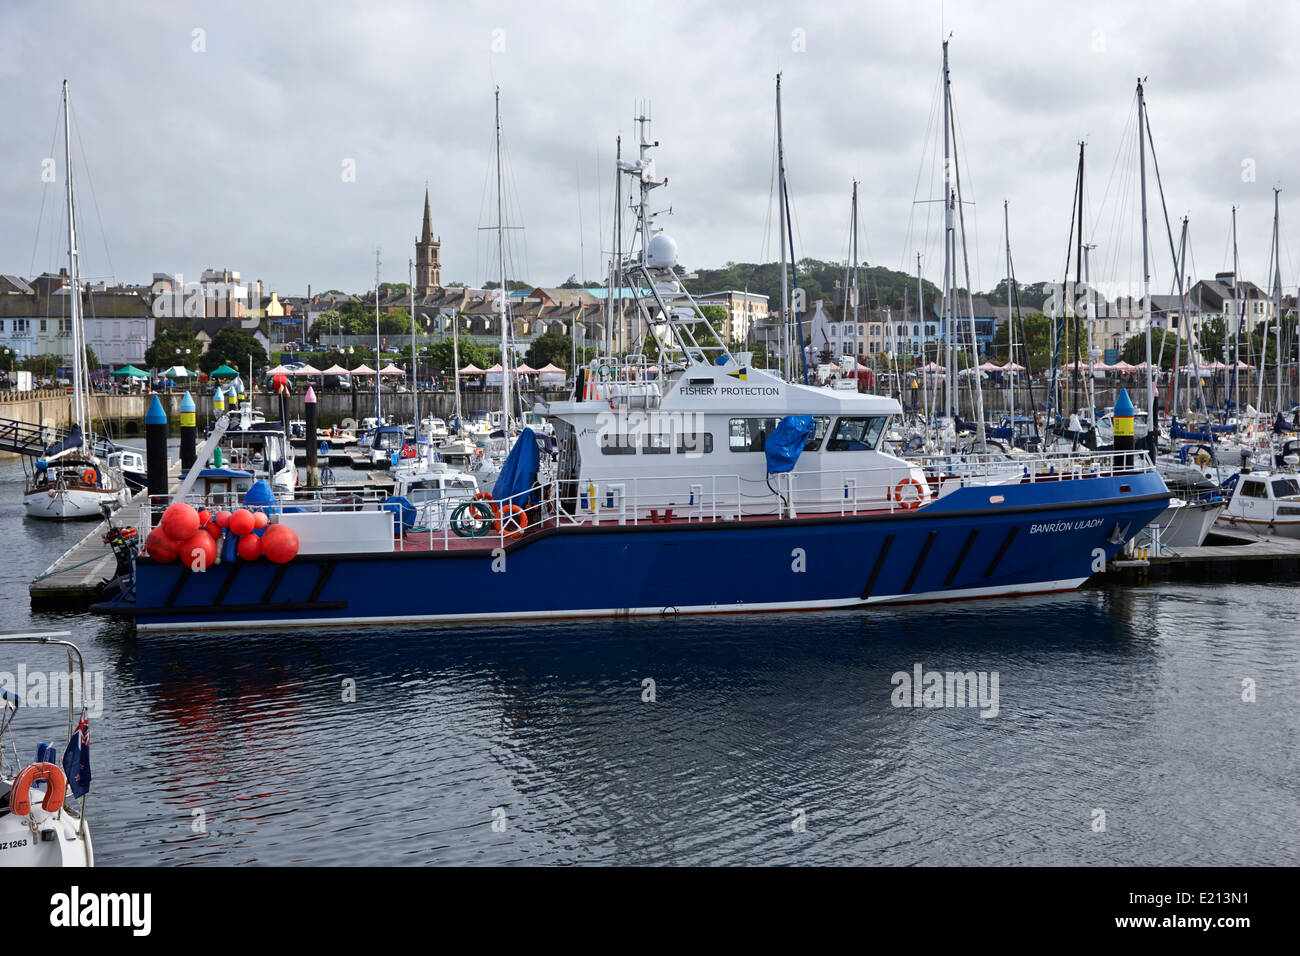 Banrion uladh uk navire de protection des pêches Bangor Northern Ireland Banque D'Images